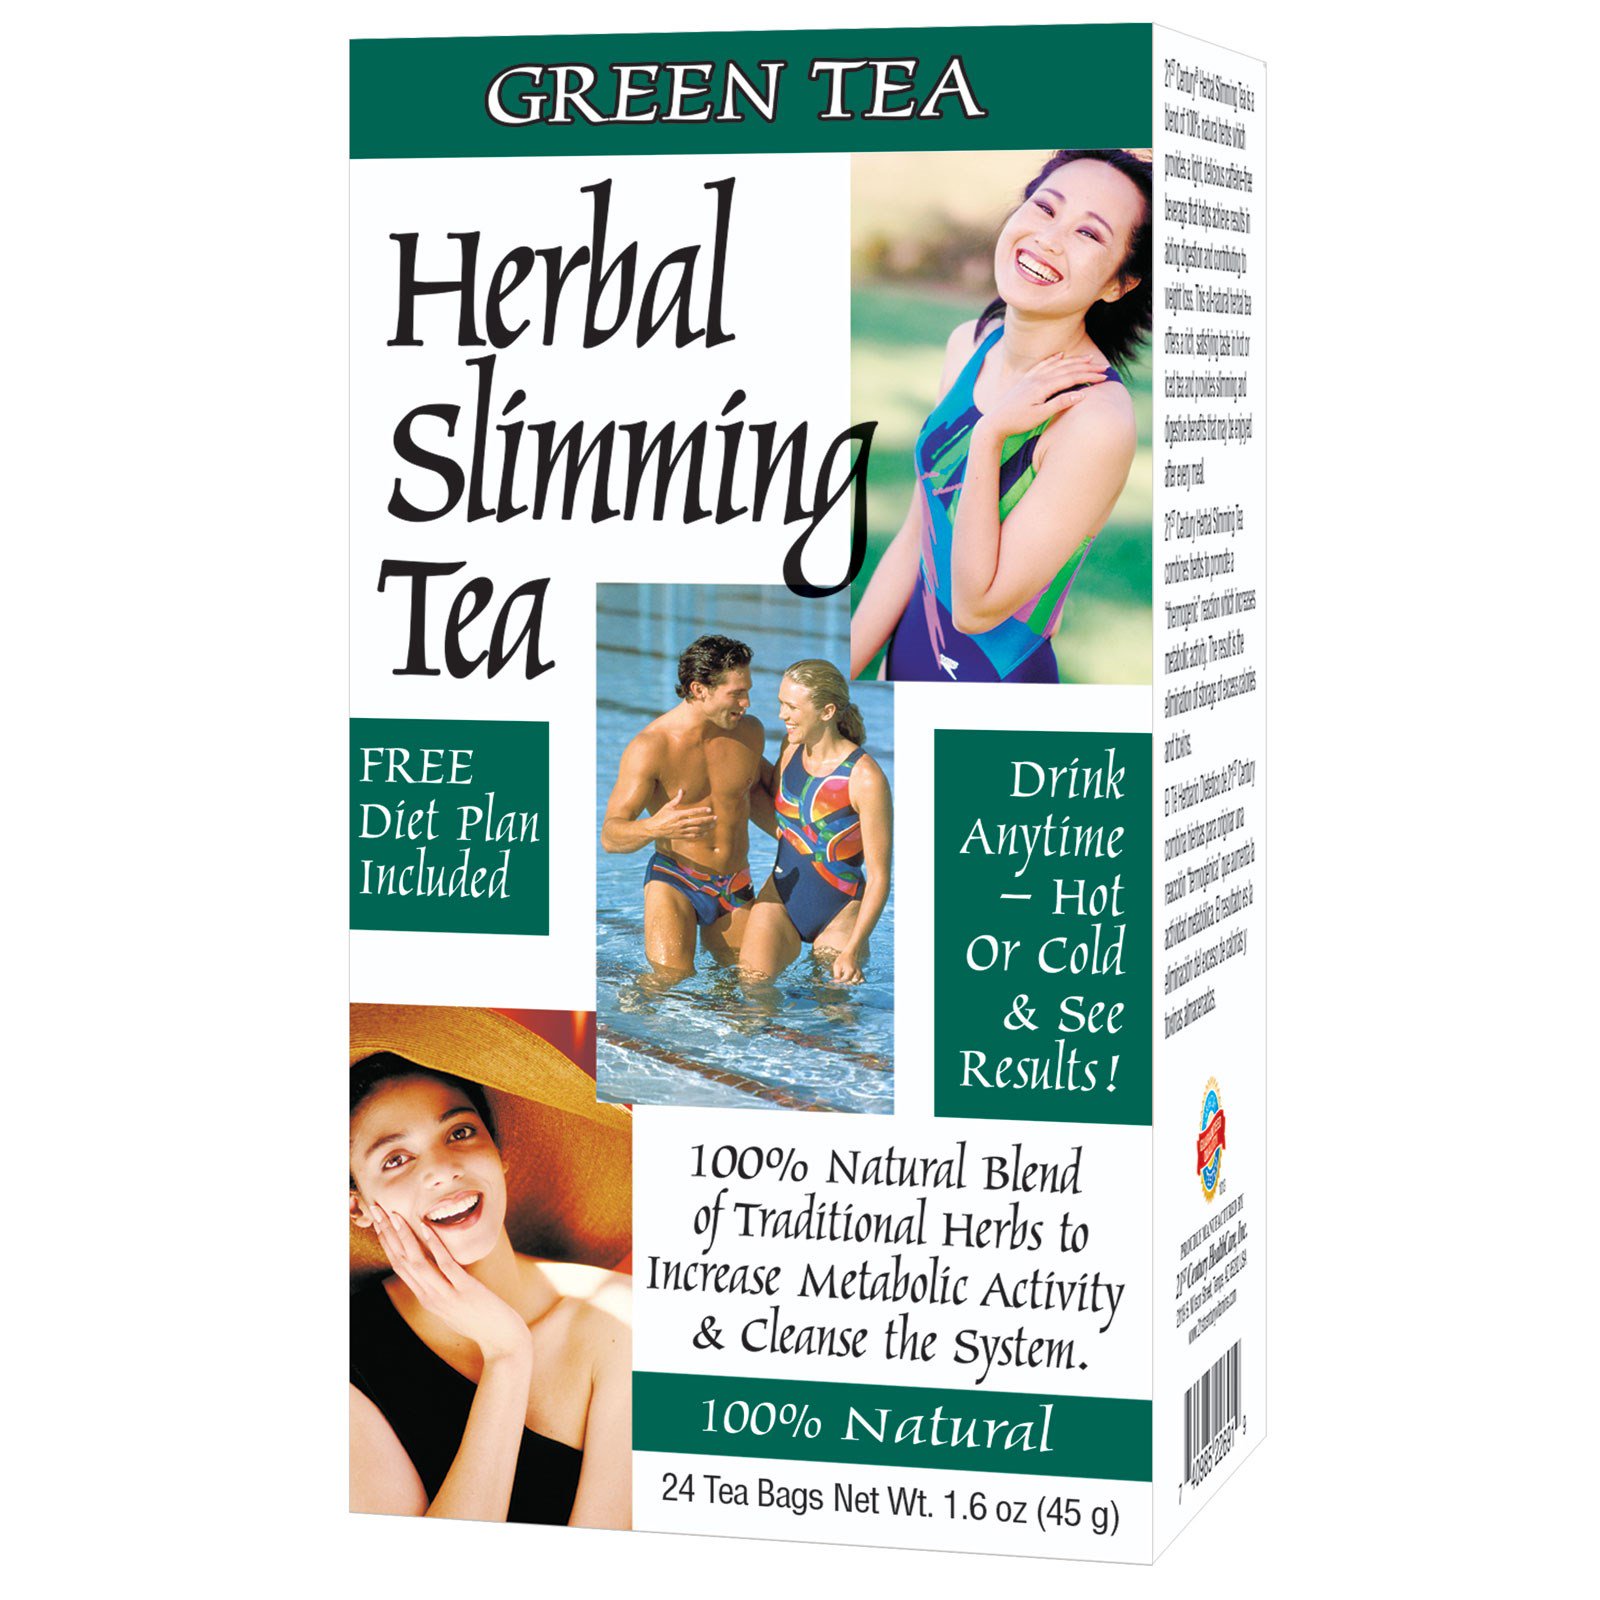 21st century herbal slimming tea green tea